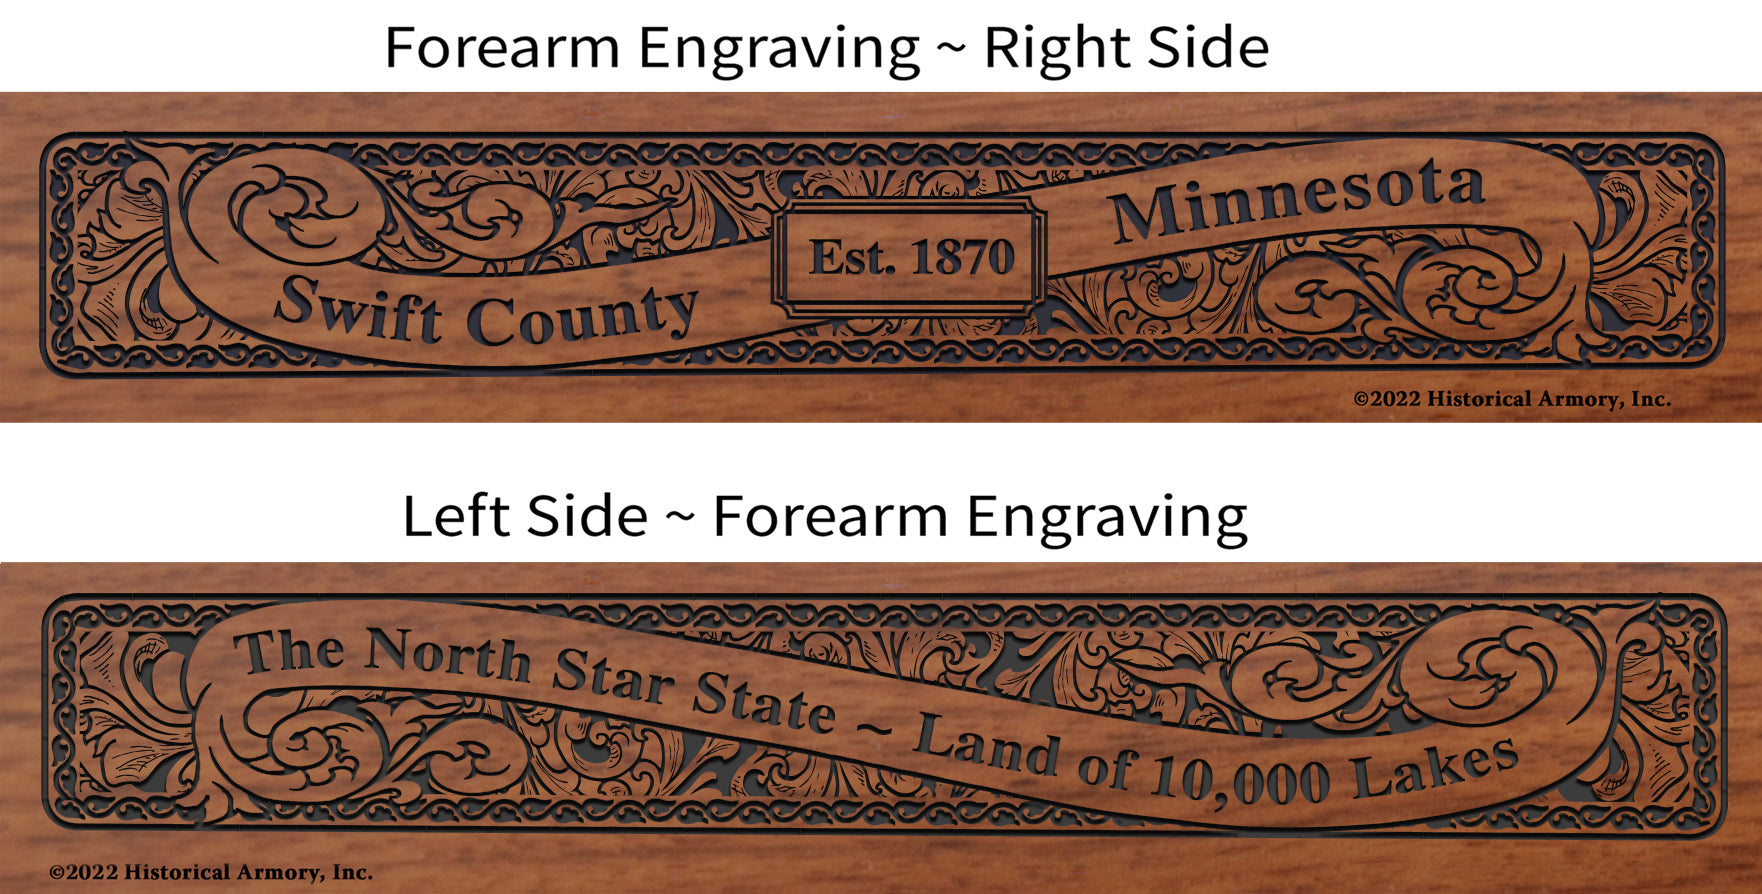 Swift County Minnesota Engraved Rifle Forearm